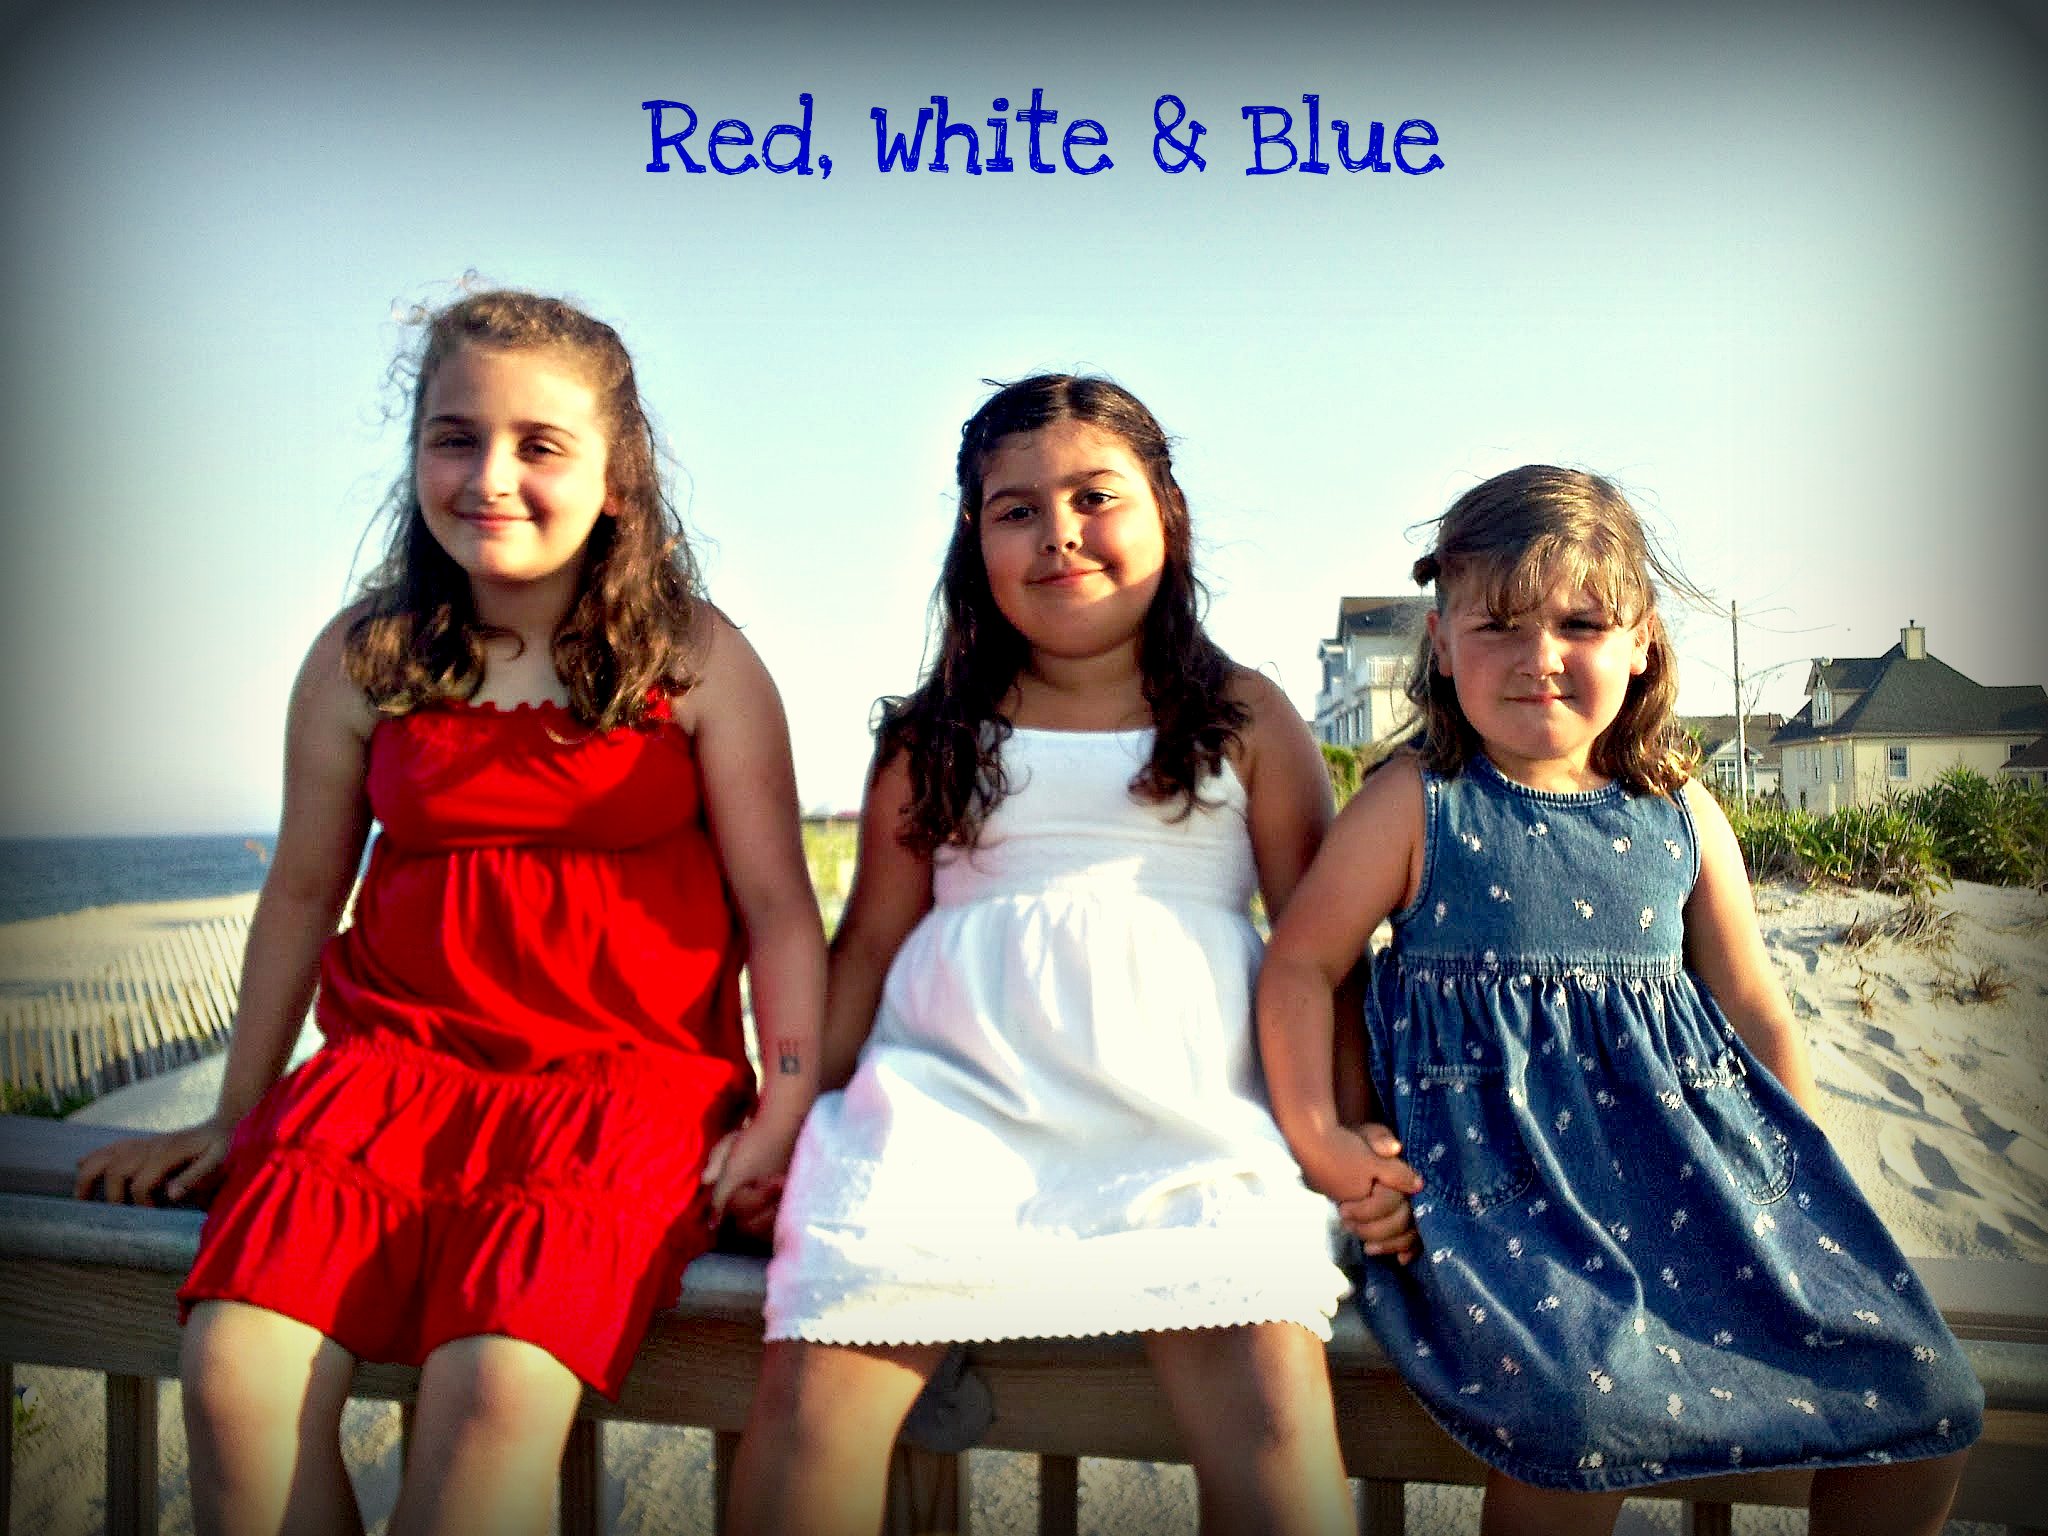 http://aliciabozza.files.wordpress.com/2012/07/red-white-and-blue.jpg